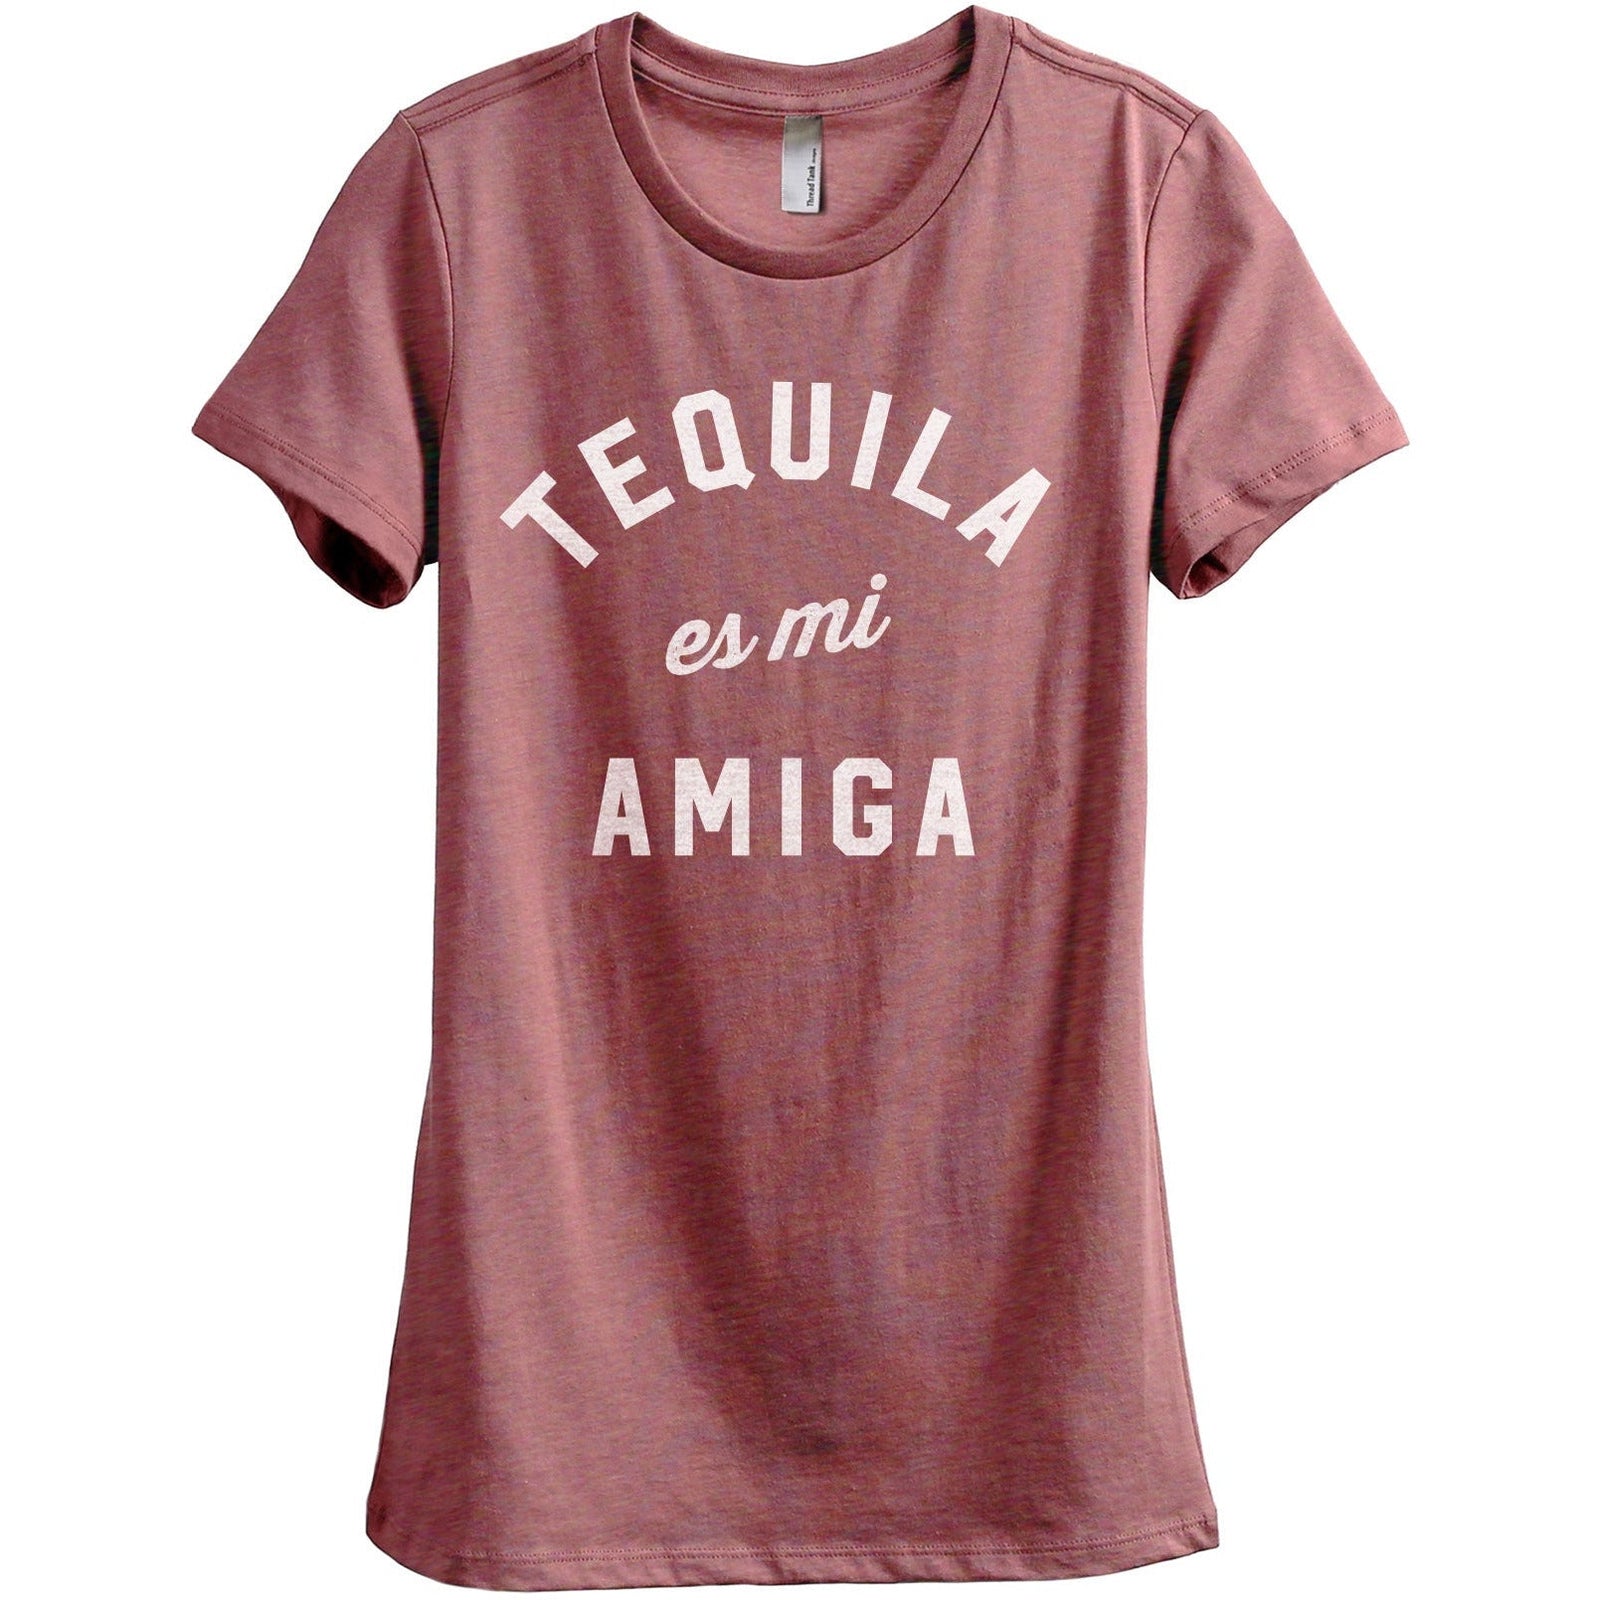 Tequila Es Mi Amiga - Stories You Can Wear